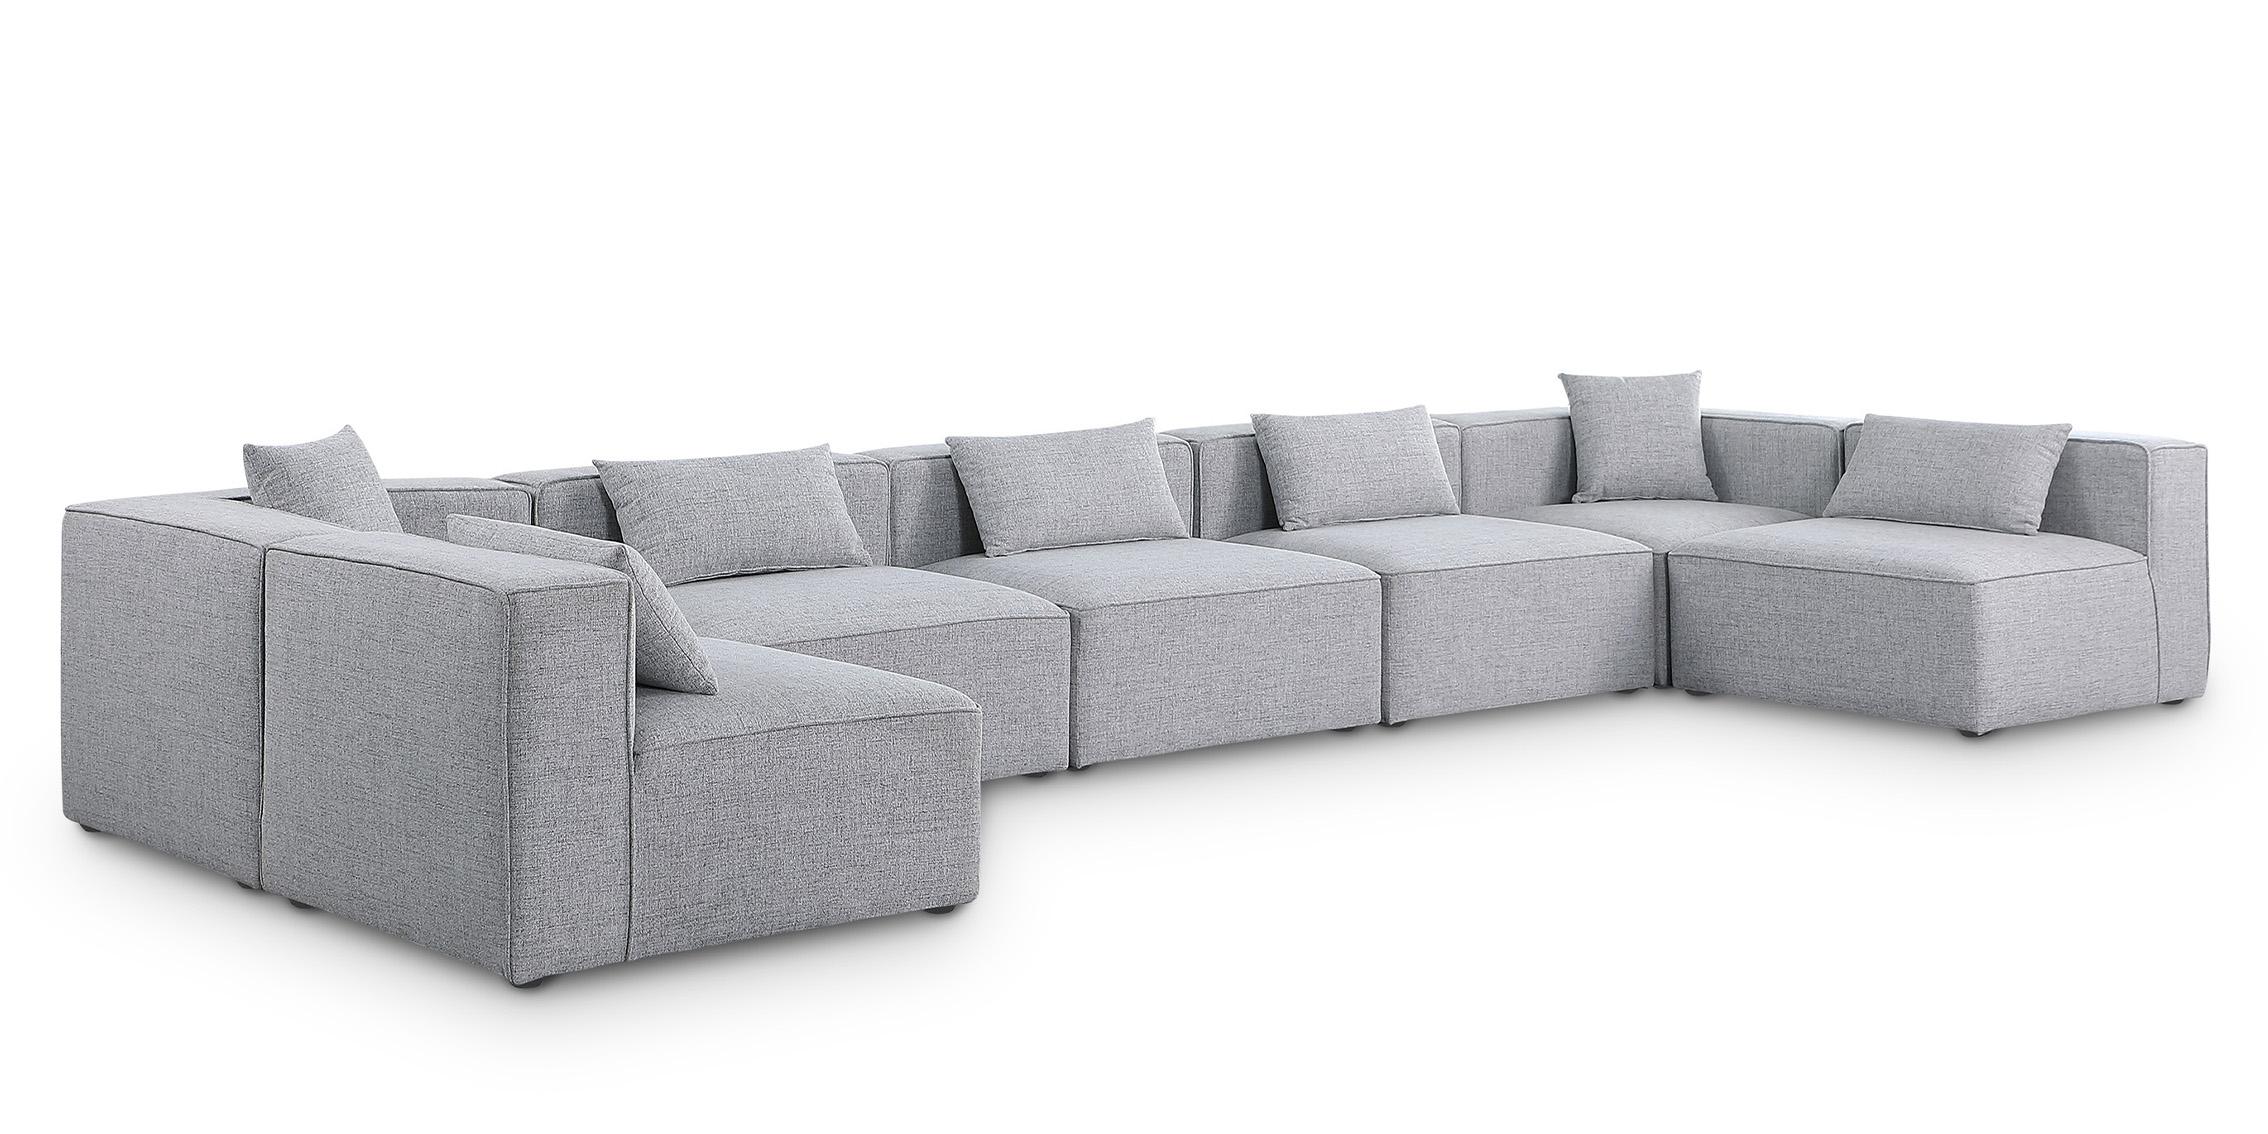 Contemporary, Modern Modular Sectional Sofa CUBE 630Grey-Sec7B 630Grey-Sec7B in Gray Linen